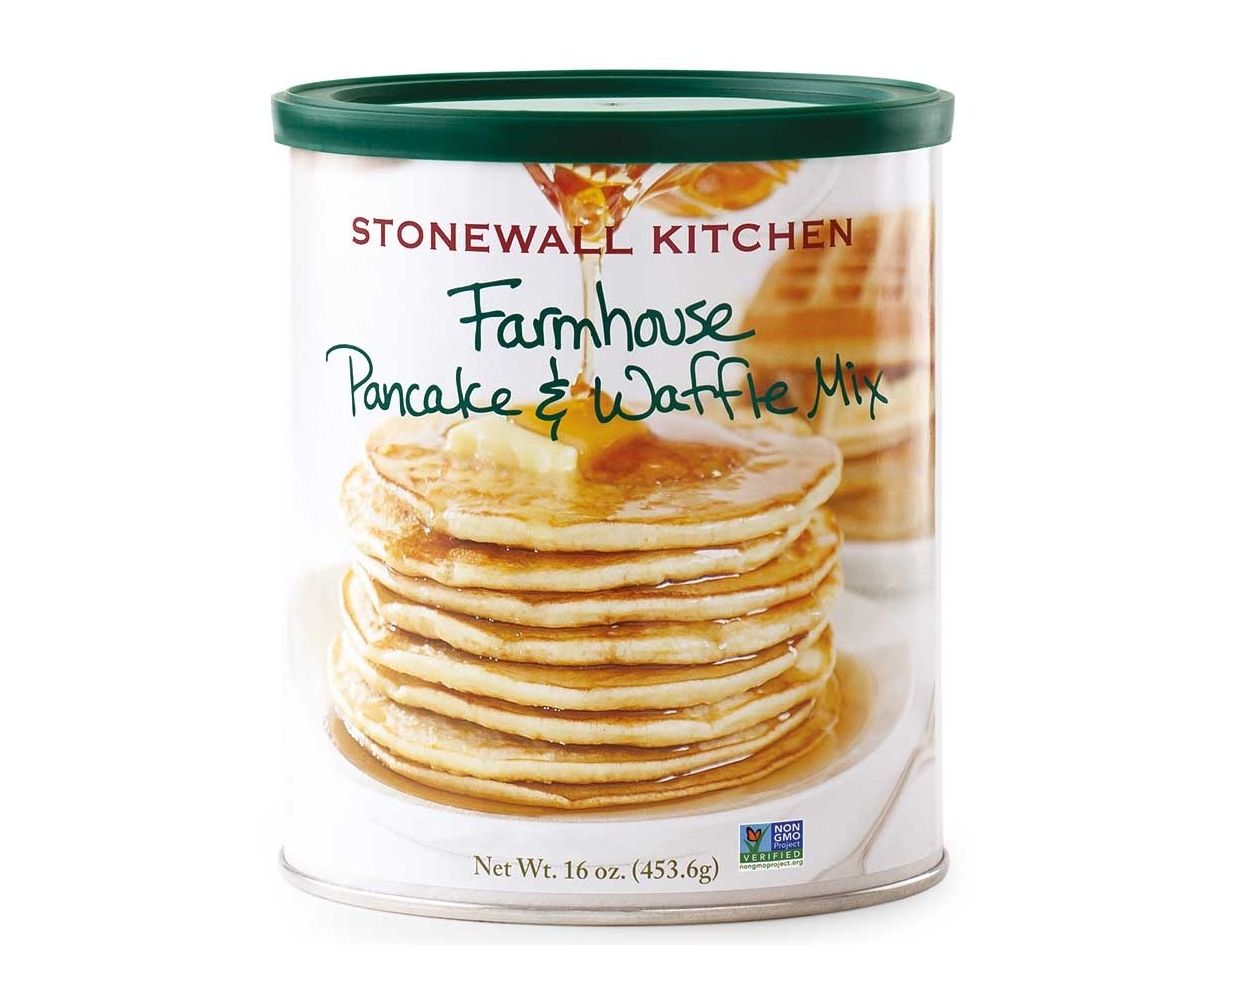 All Natural Farmhouse Pancake & Waffle Mix kaufen | Pancake und Waffelmix | Perfekt zum Frühstück mit Ahornsirup | EU-weiter Versand